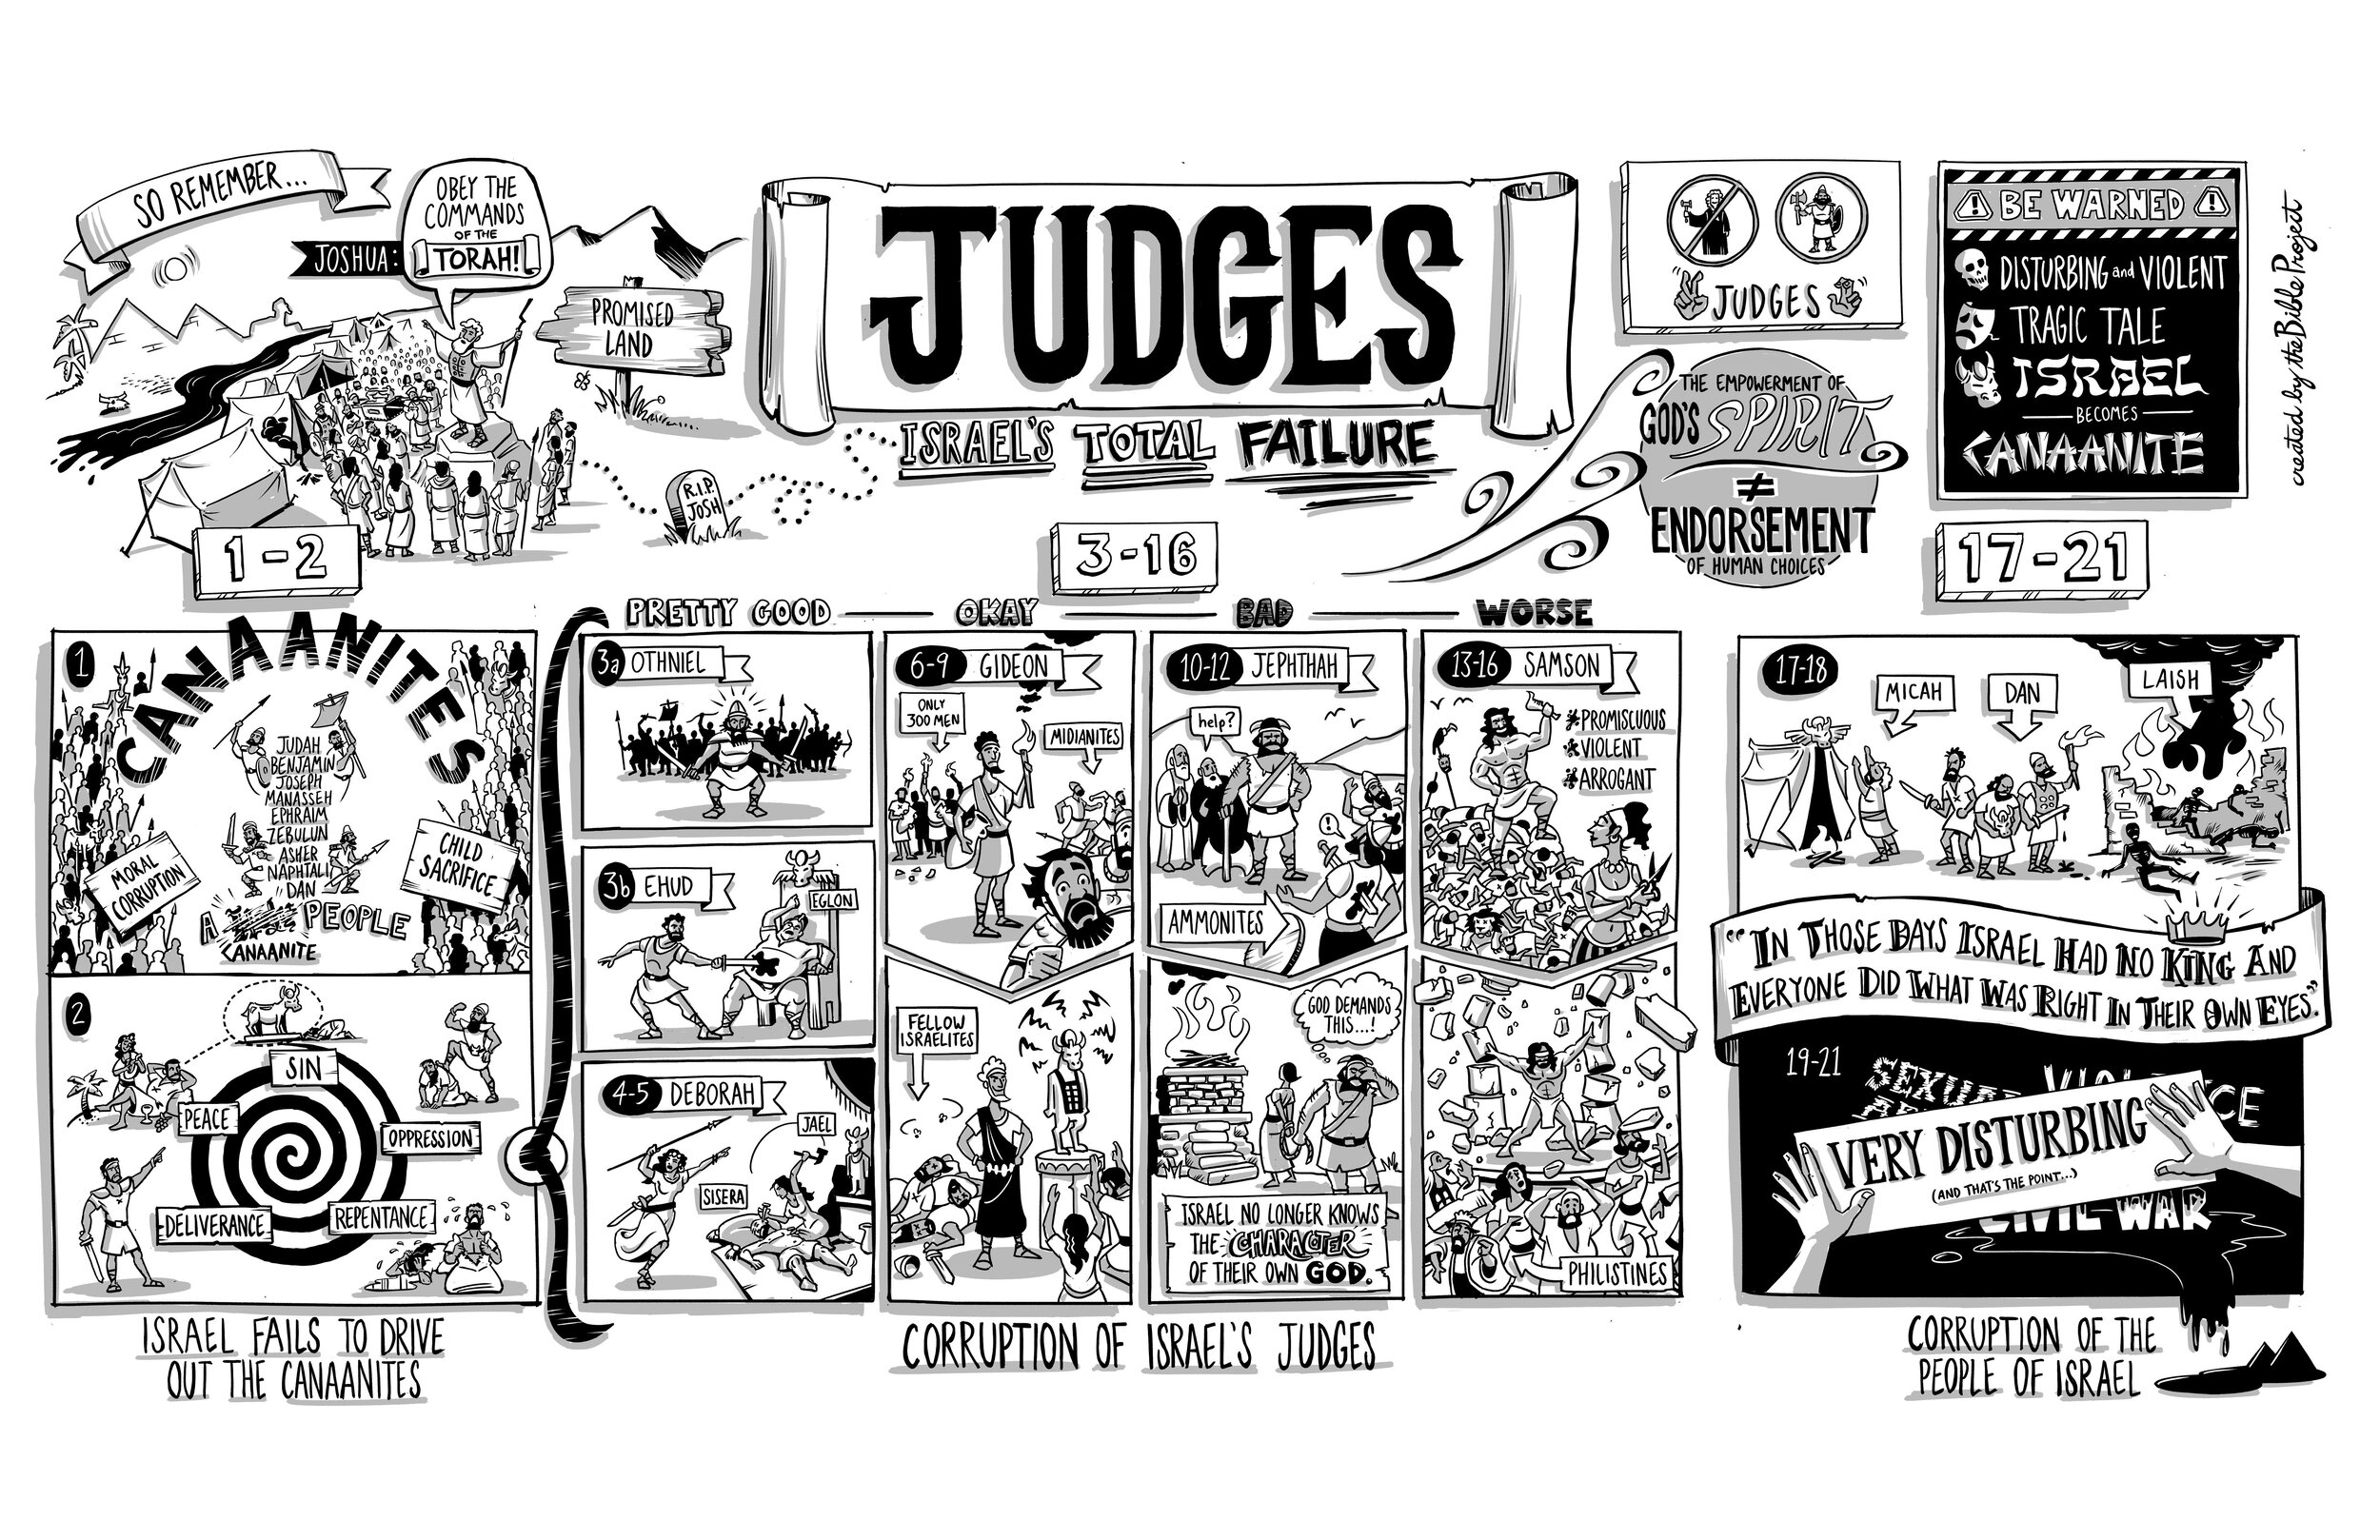 BibleProject: Judges (Video)